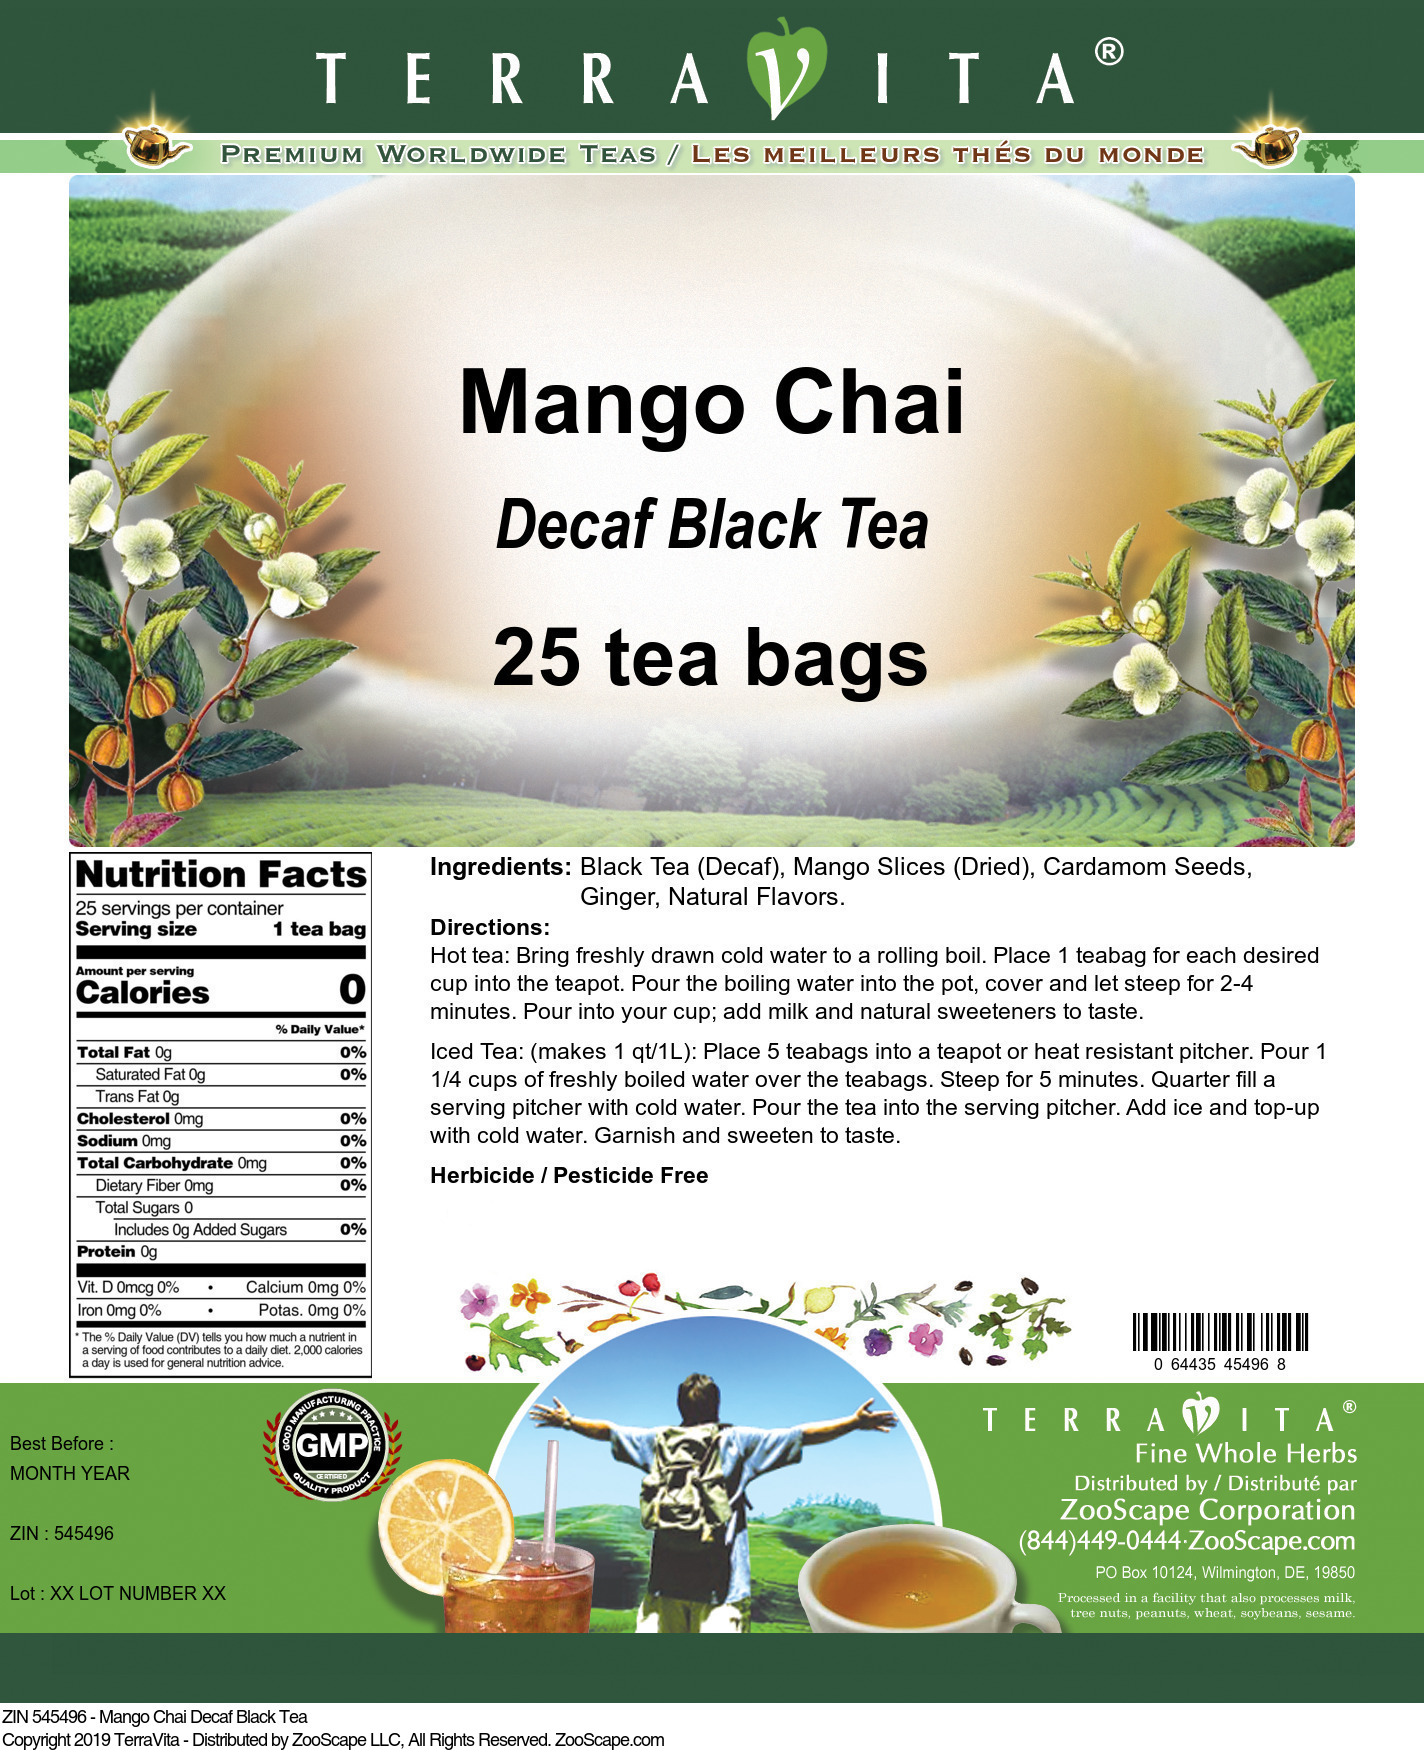 Mango Chai Decaf Black Tea - Label